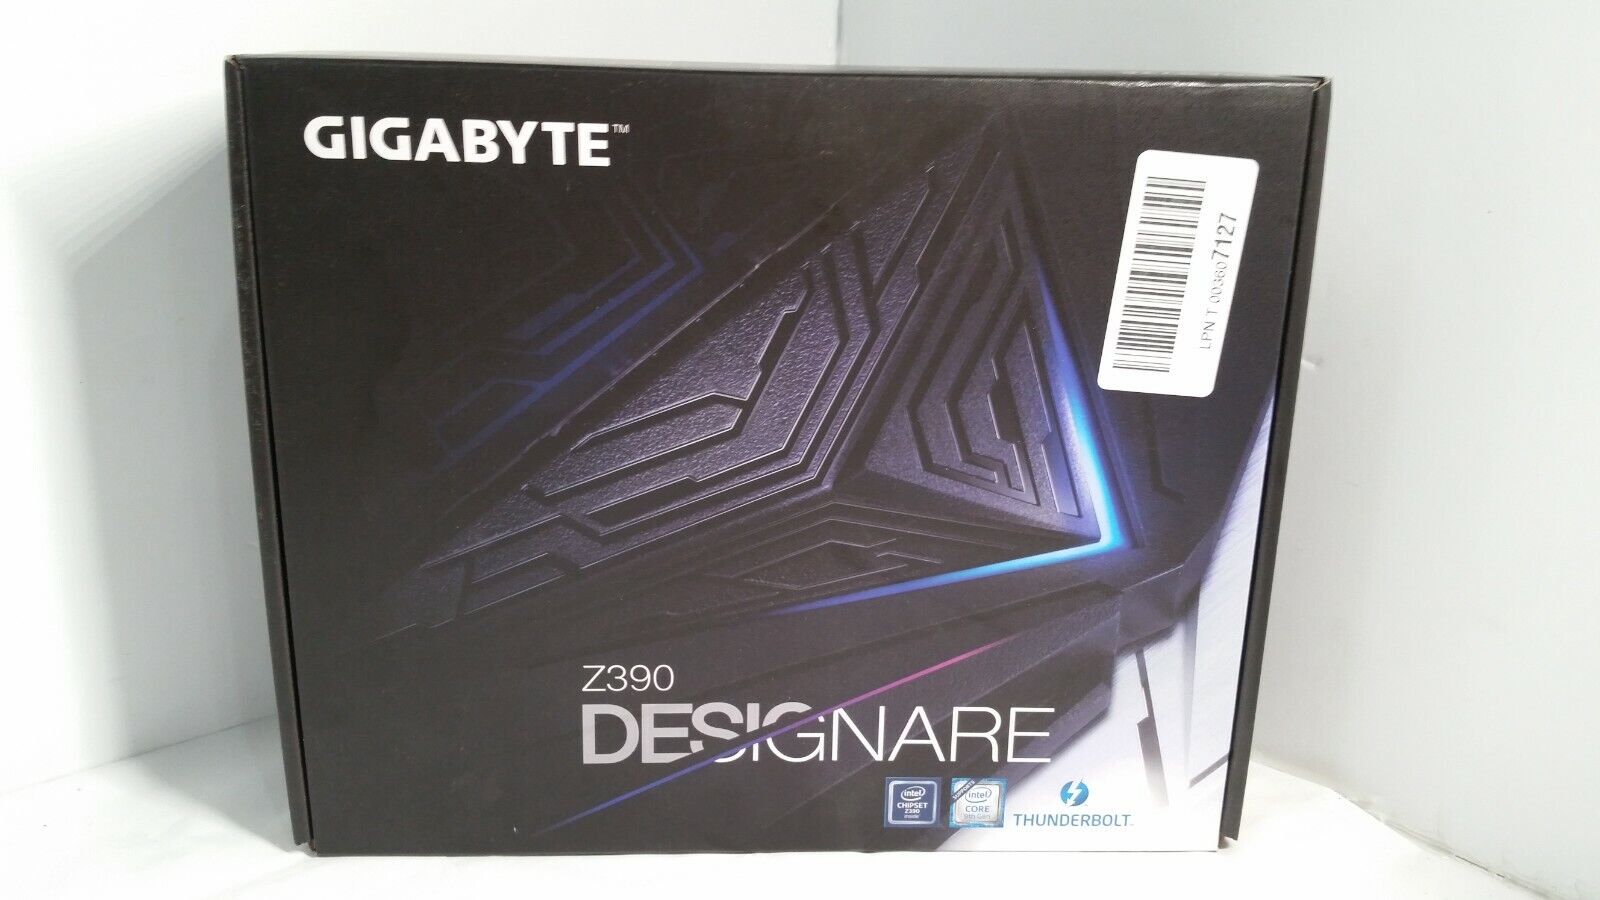 GIGABYTE Z390 Designare LGA1151, Intel Motherboard